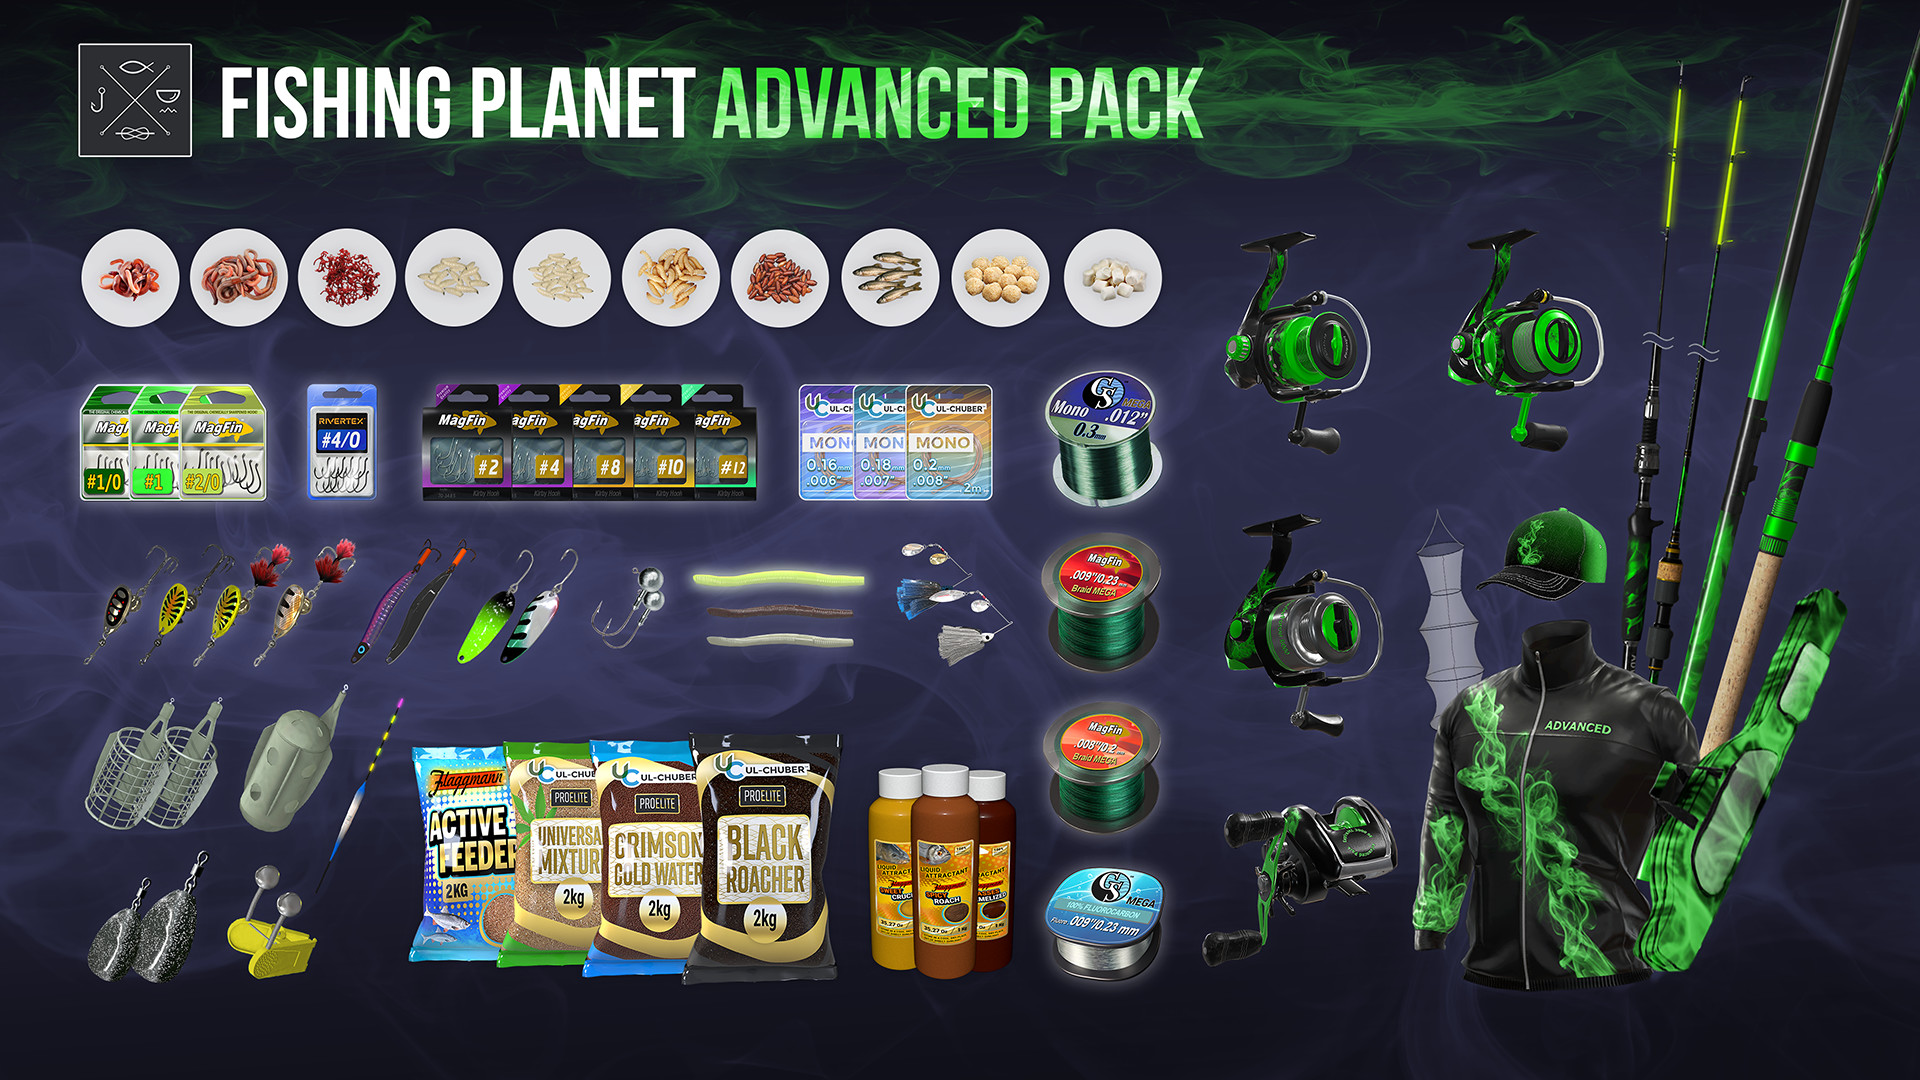 Fishing Planet - Advanced Pack DLC EU V2 Steam Altergift